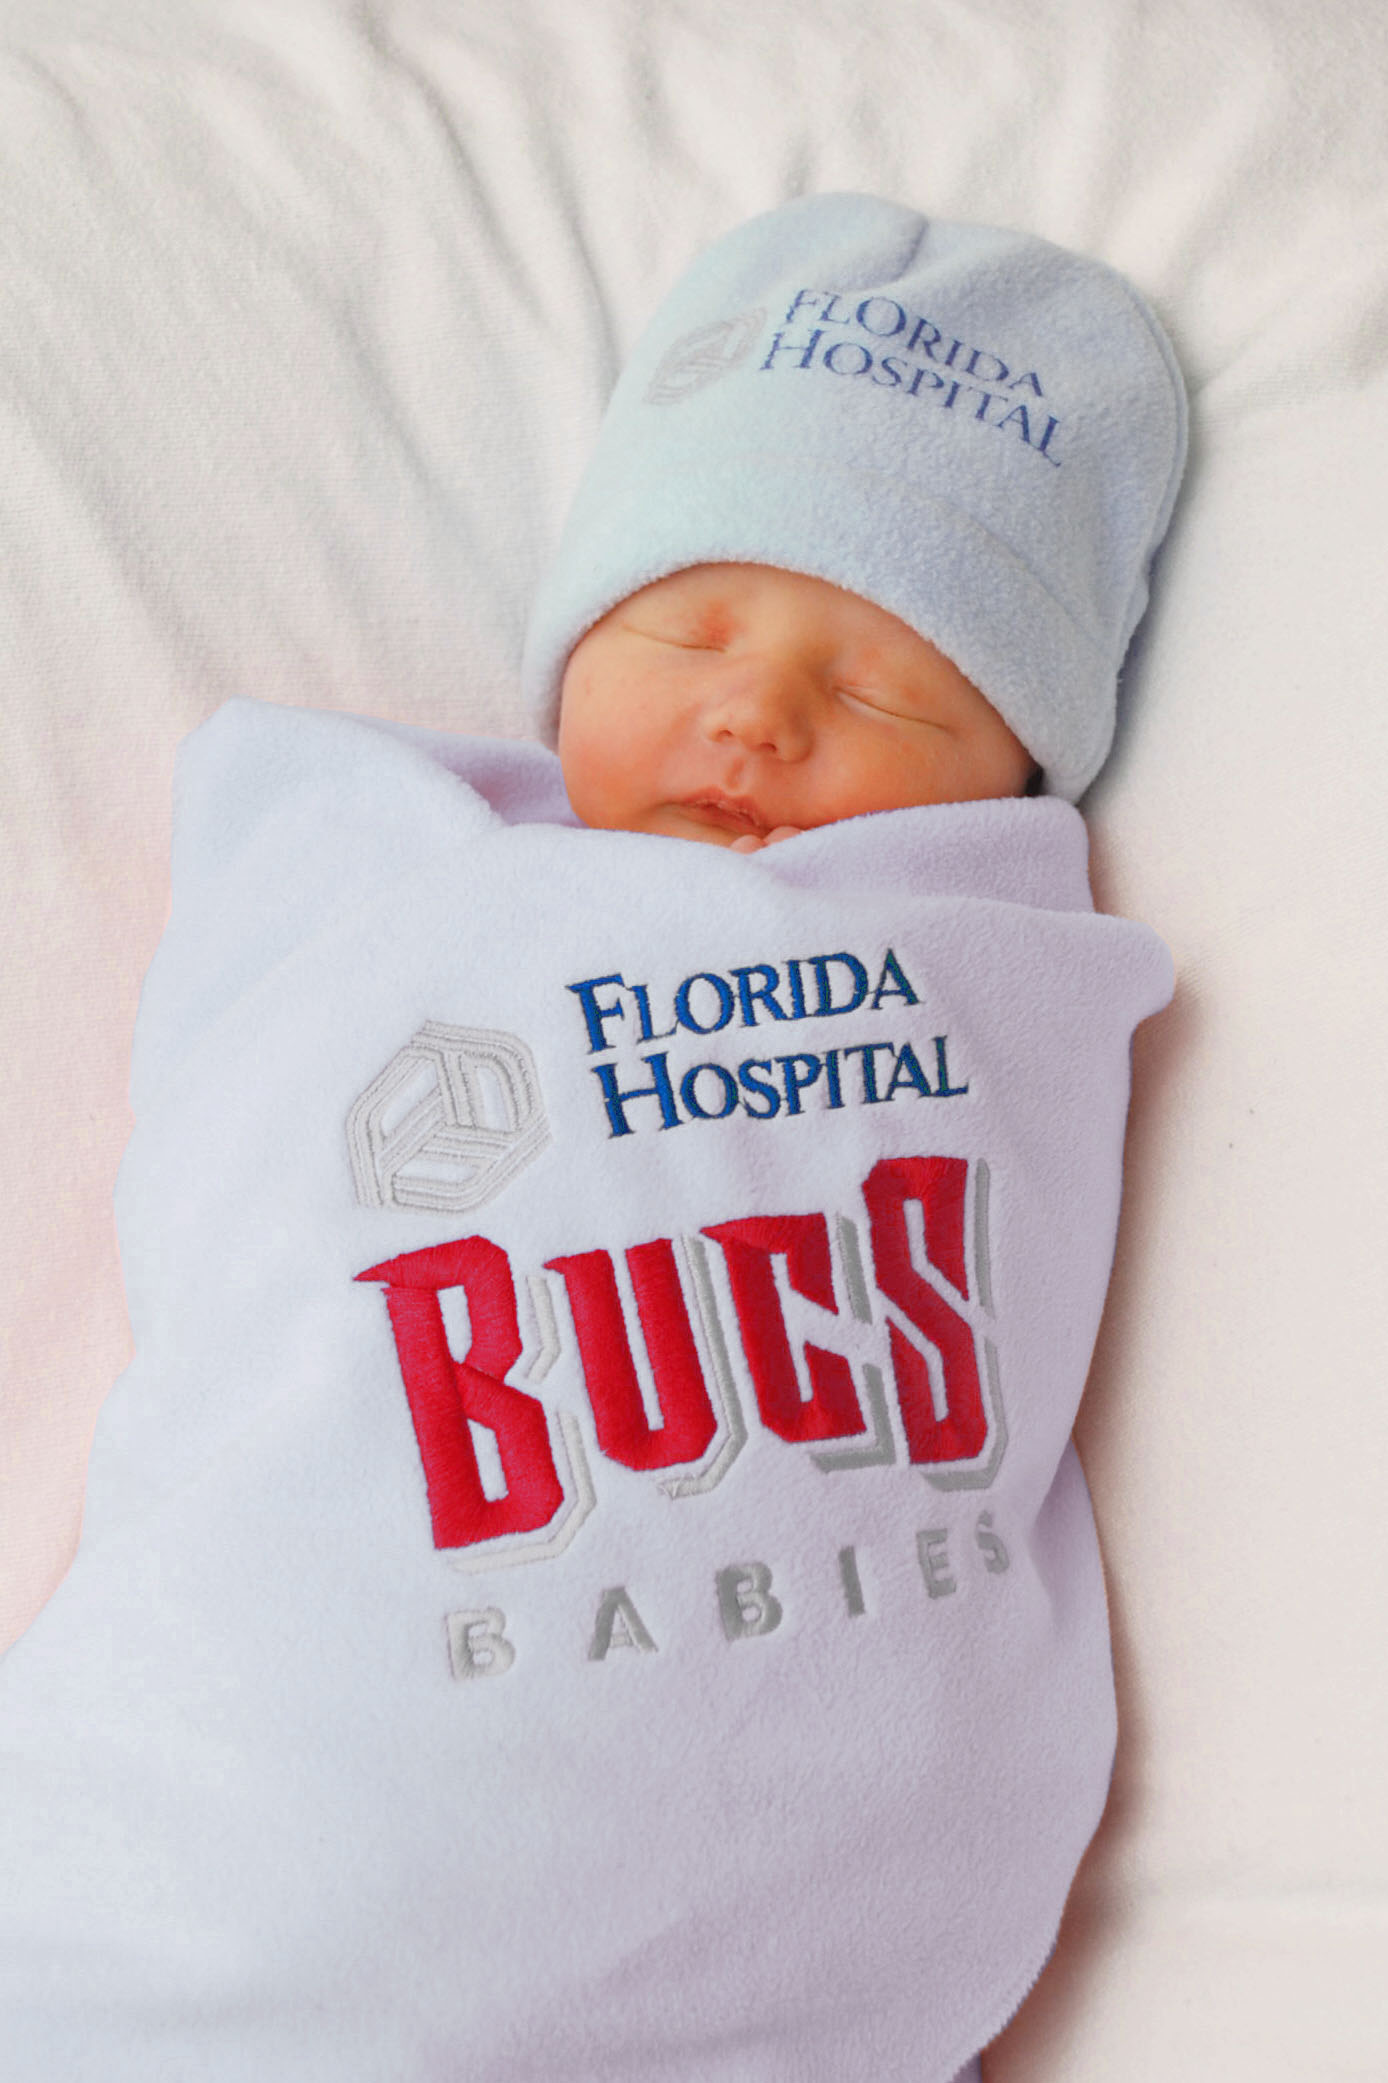 Bucs Baby Boy Born at Florida Hospital Tampa